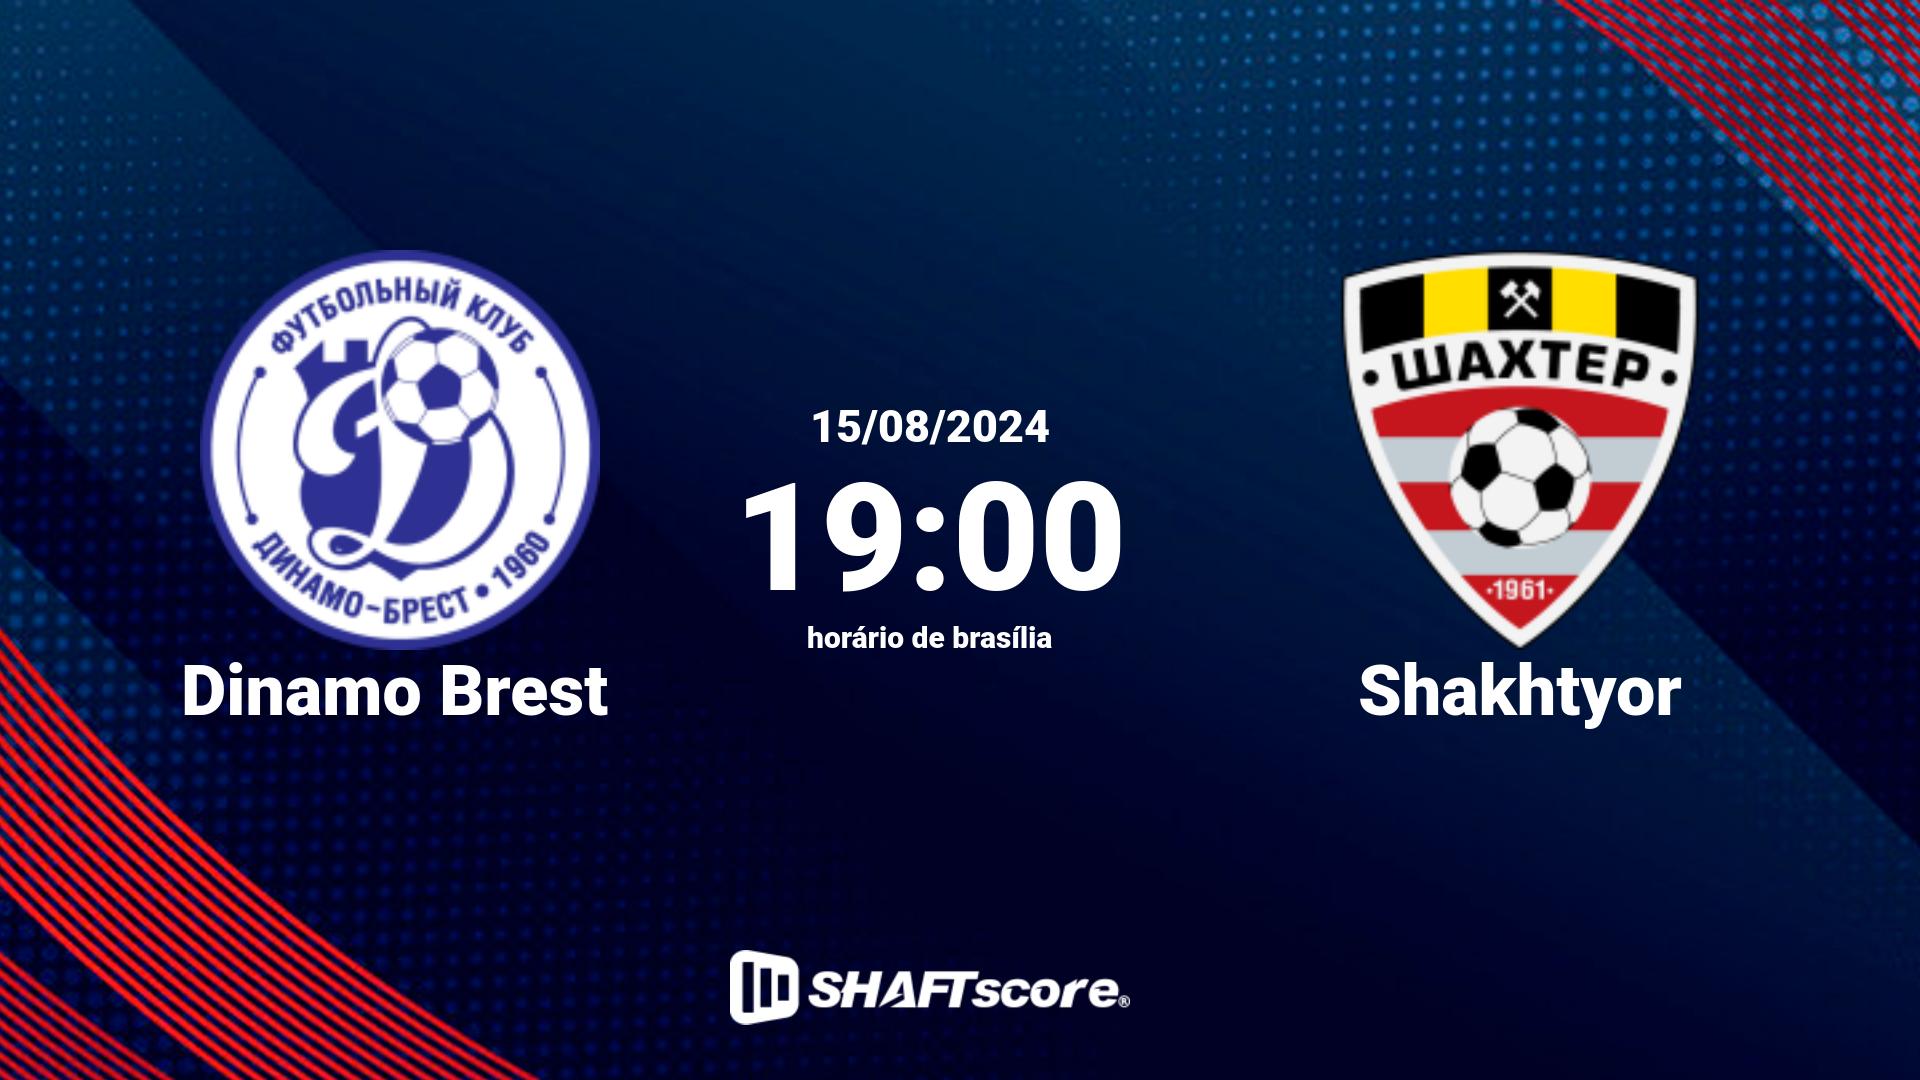 Estatísticas do jogo Dinamo Brest vs Shakhtyor 15.08 19:00